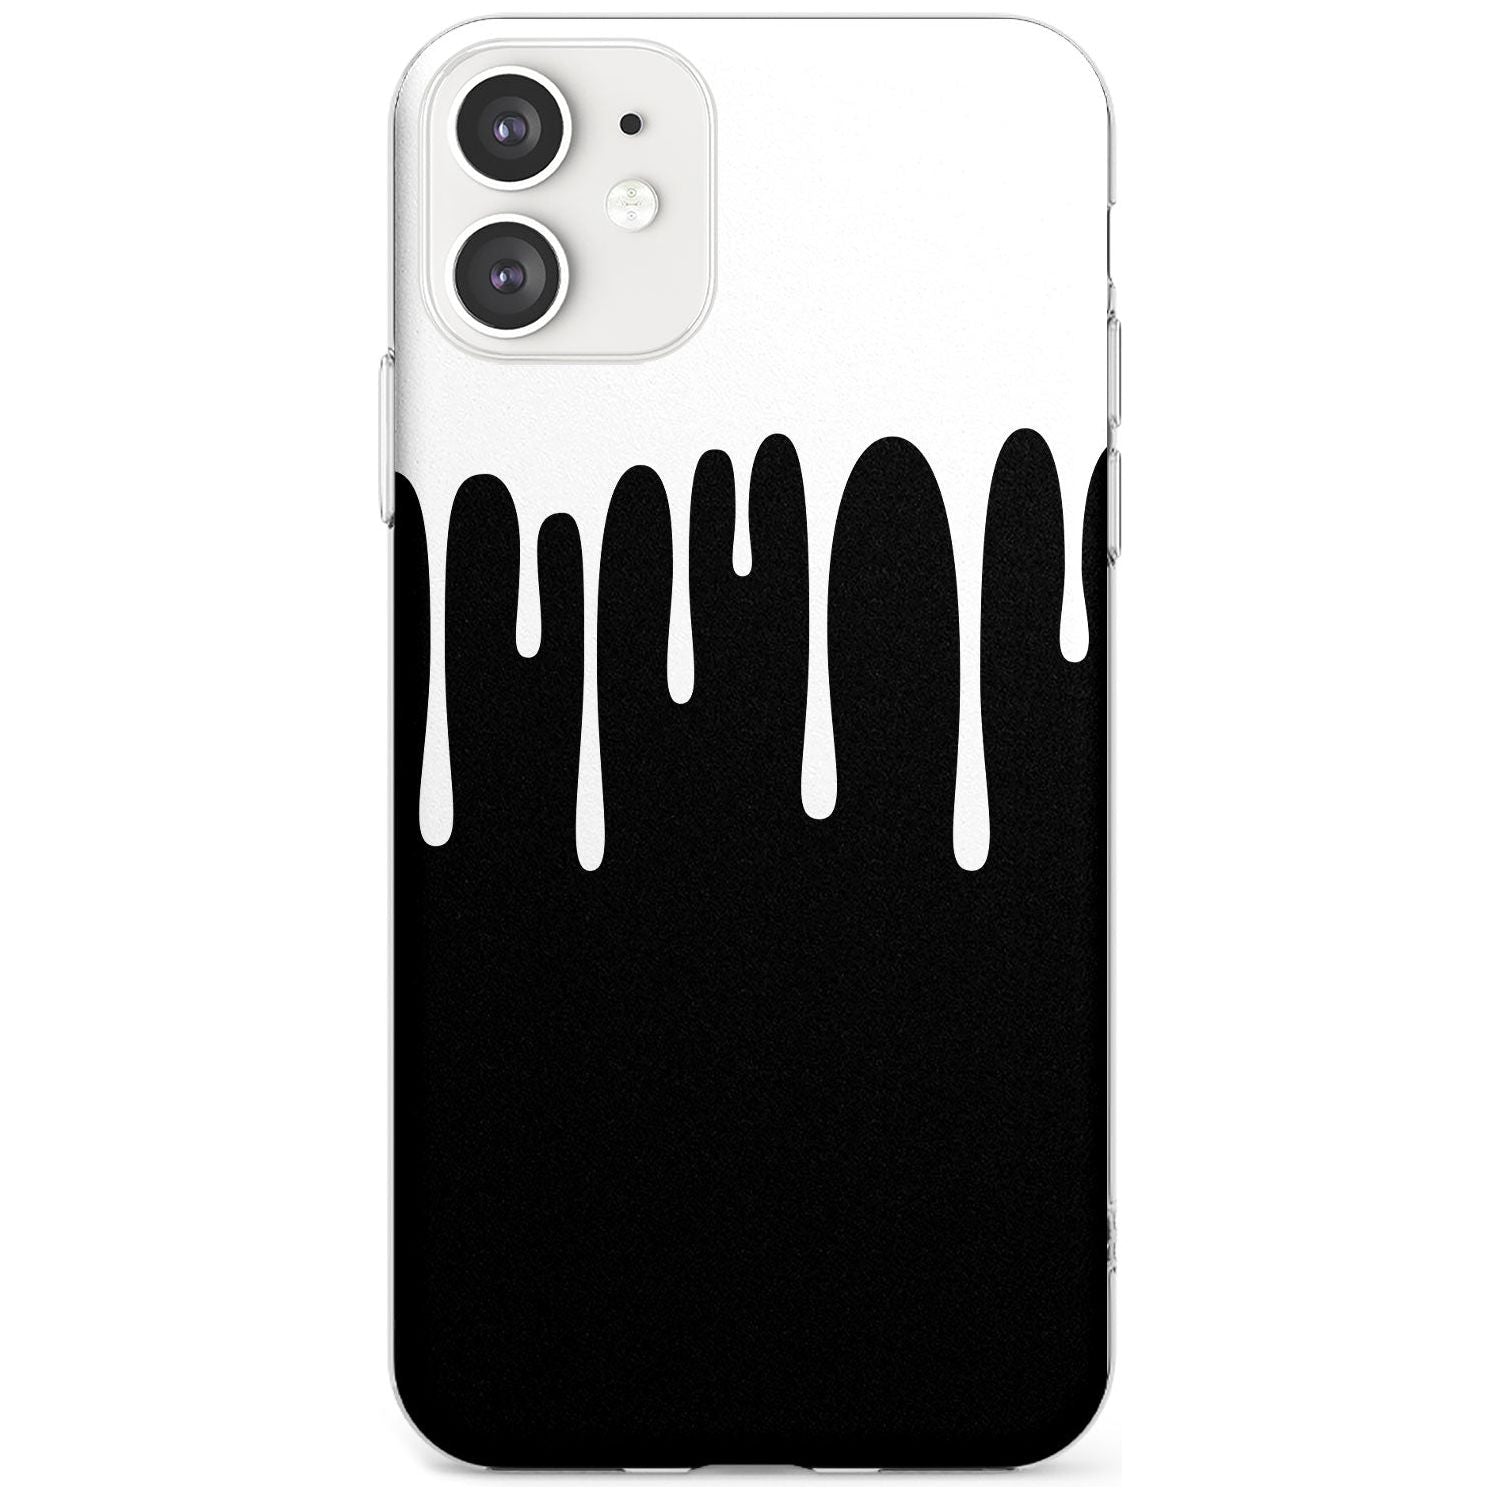 Melted Effect: White & Black iPhone Case Slim TPU Phone Case Warehouse 11